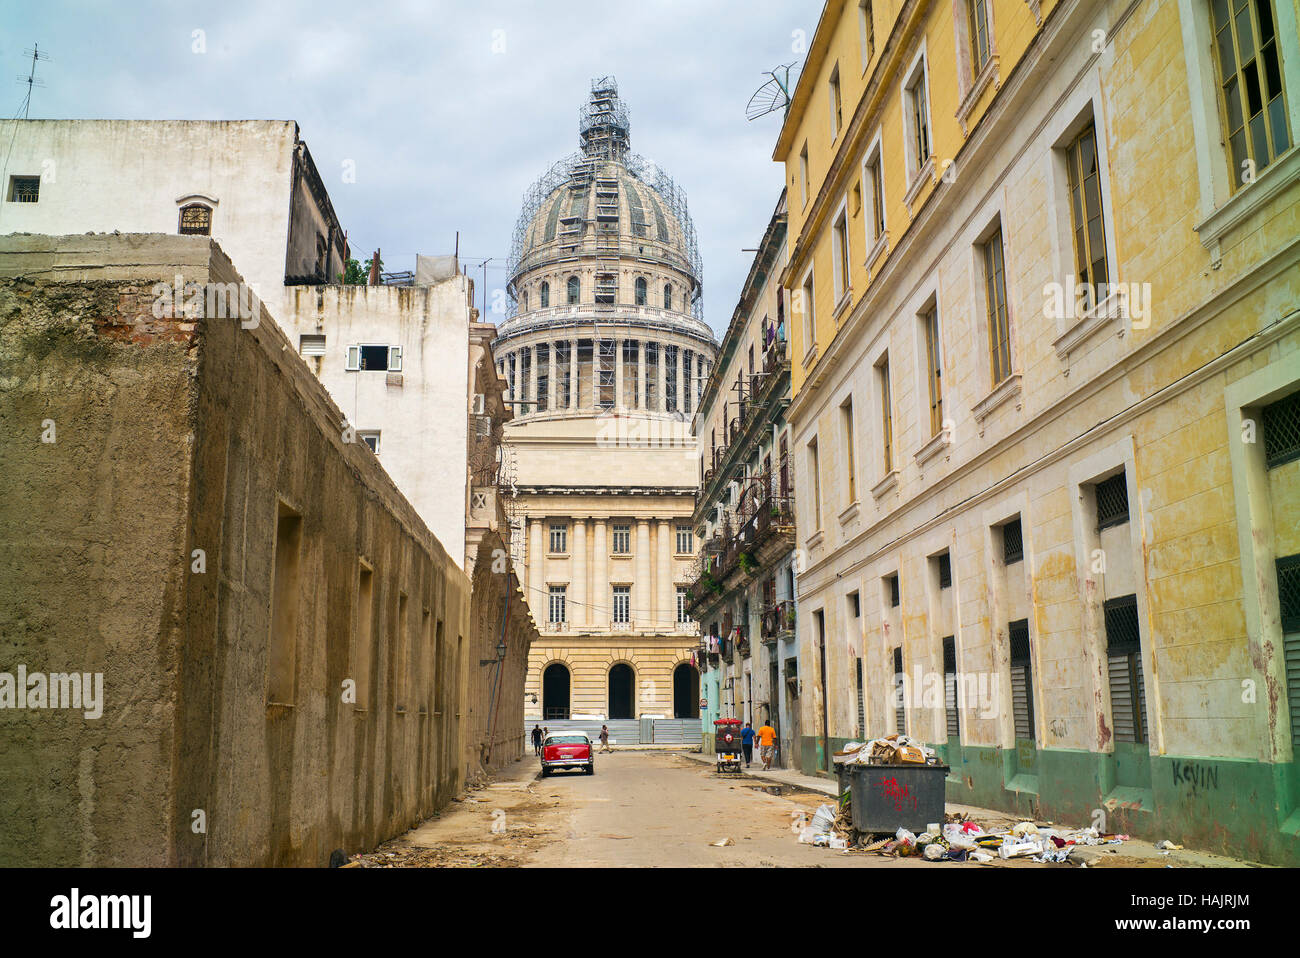 View Capitolio Nacional,covered in Scaffolding, Havana, Cuba,rubbish in street Stock Photo